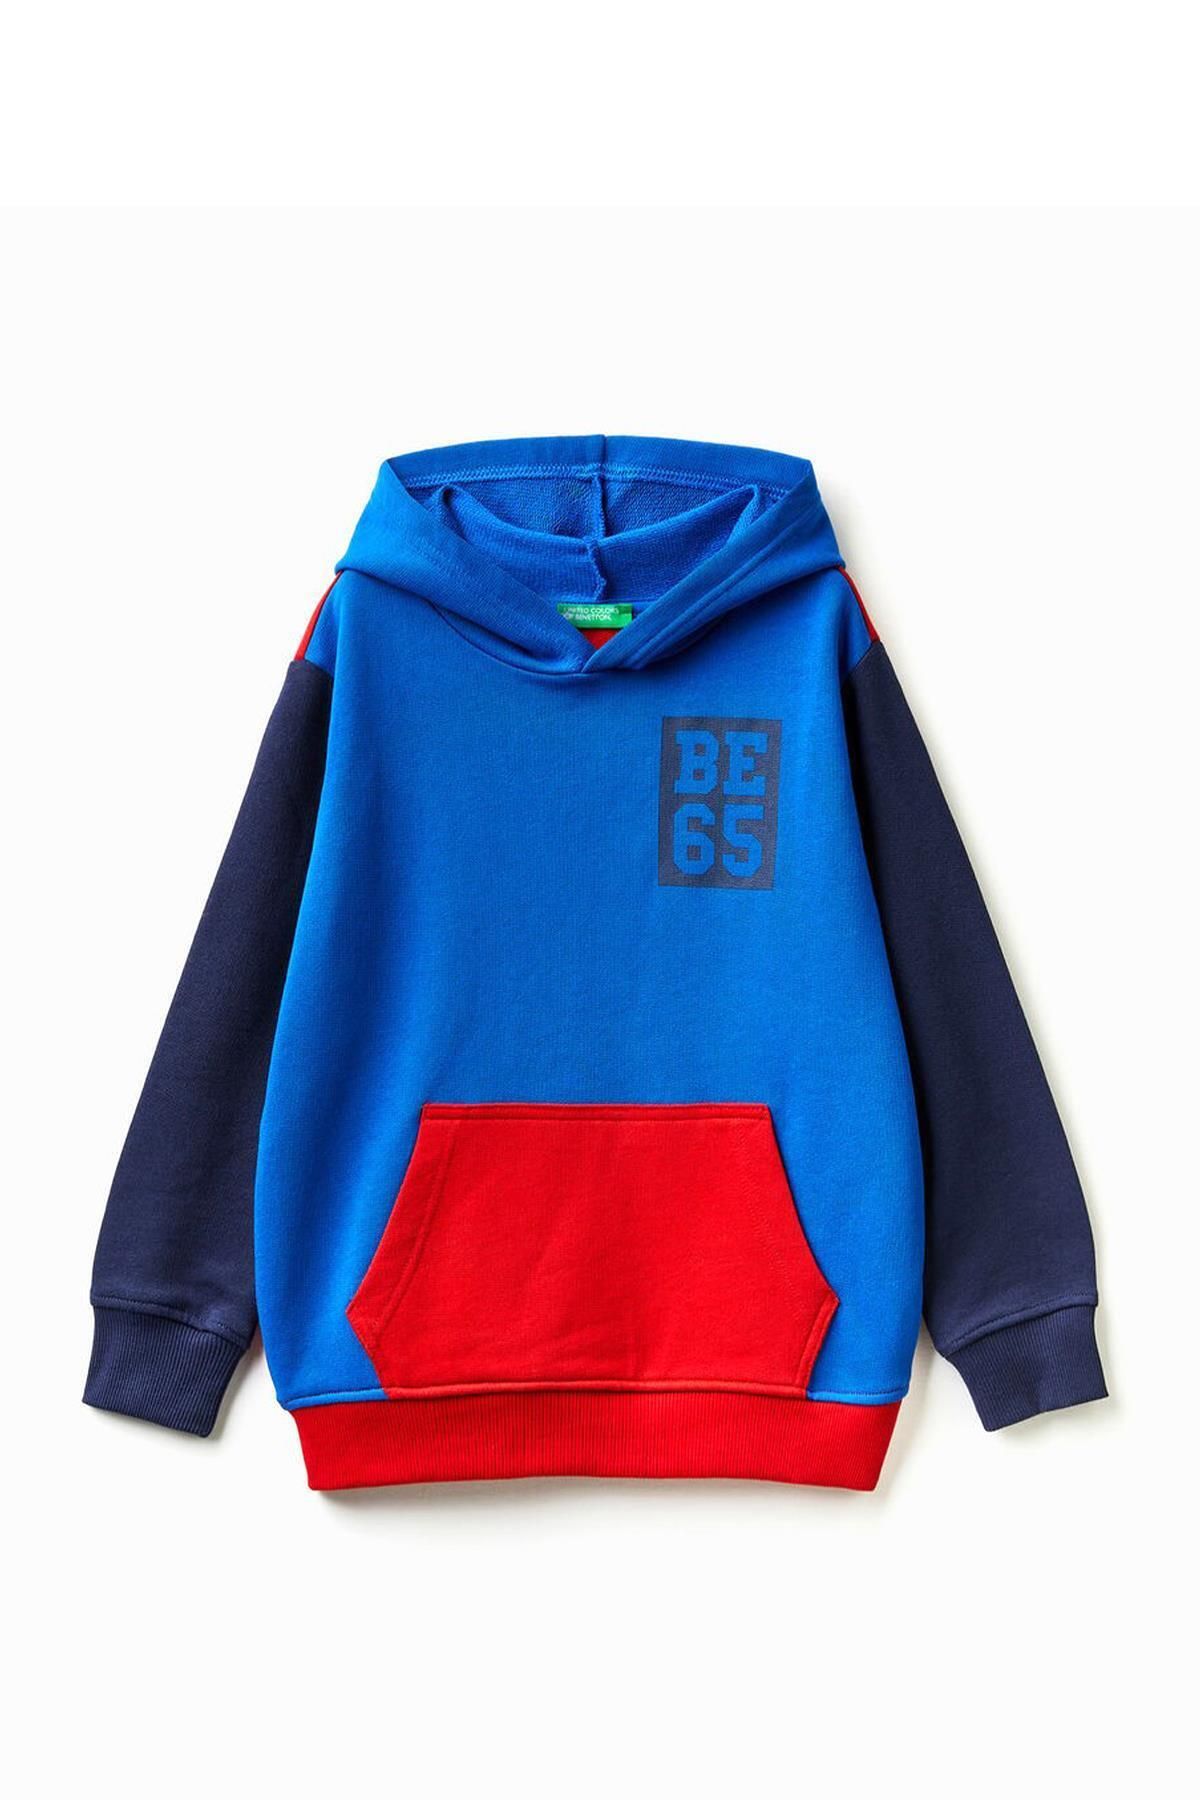 United Colors of Benetton Erkek Çocuk Sweatshirt 3j68c202m